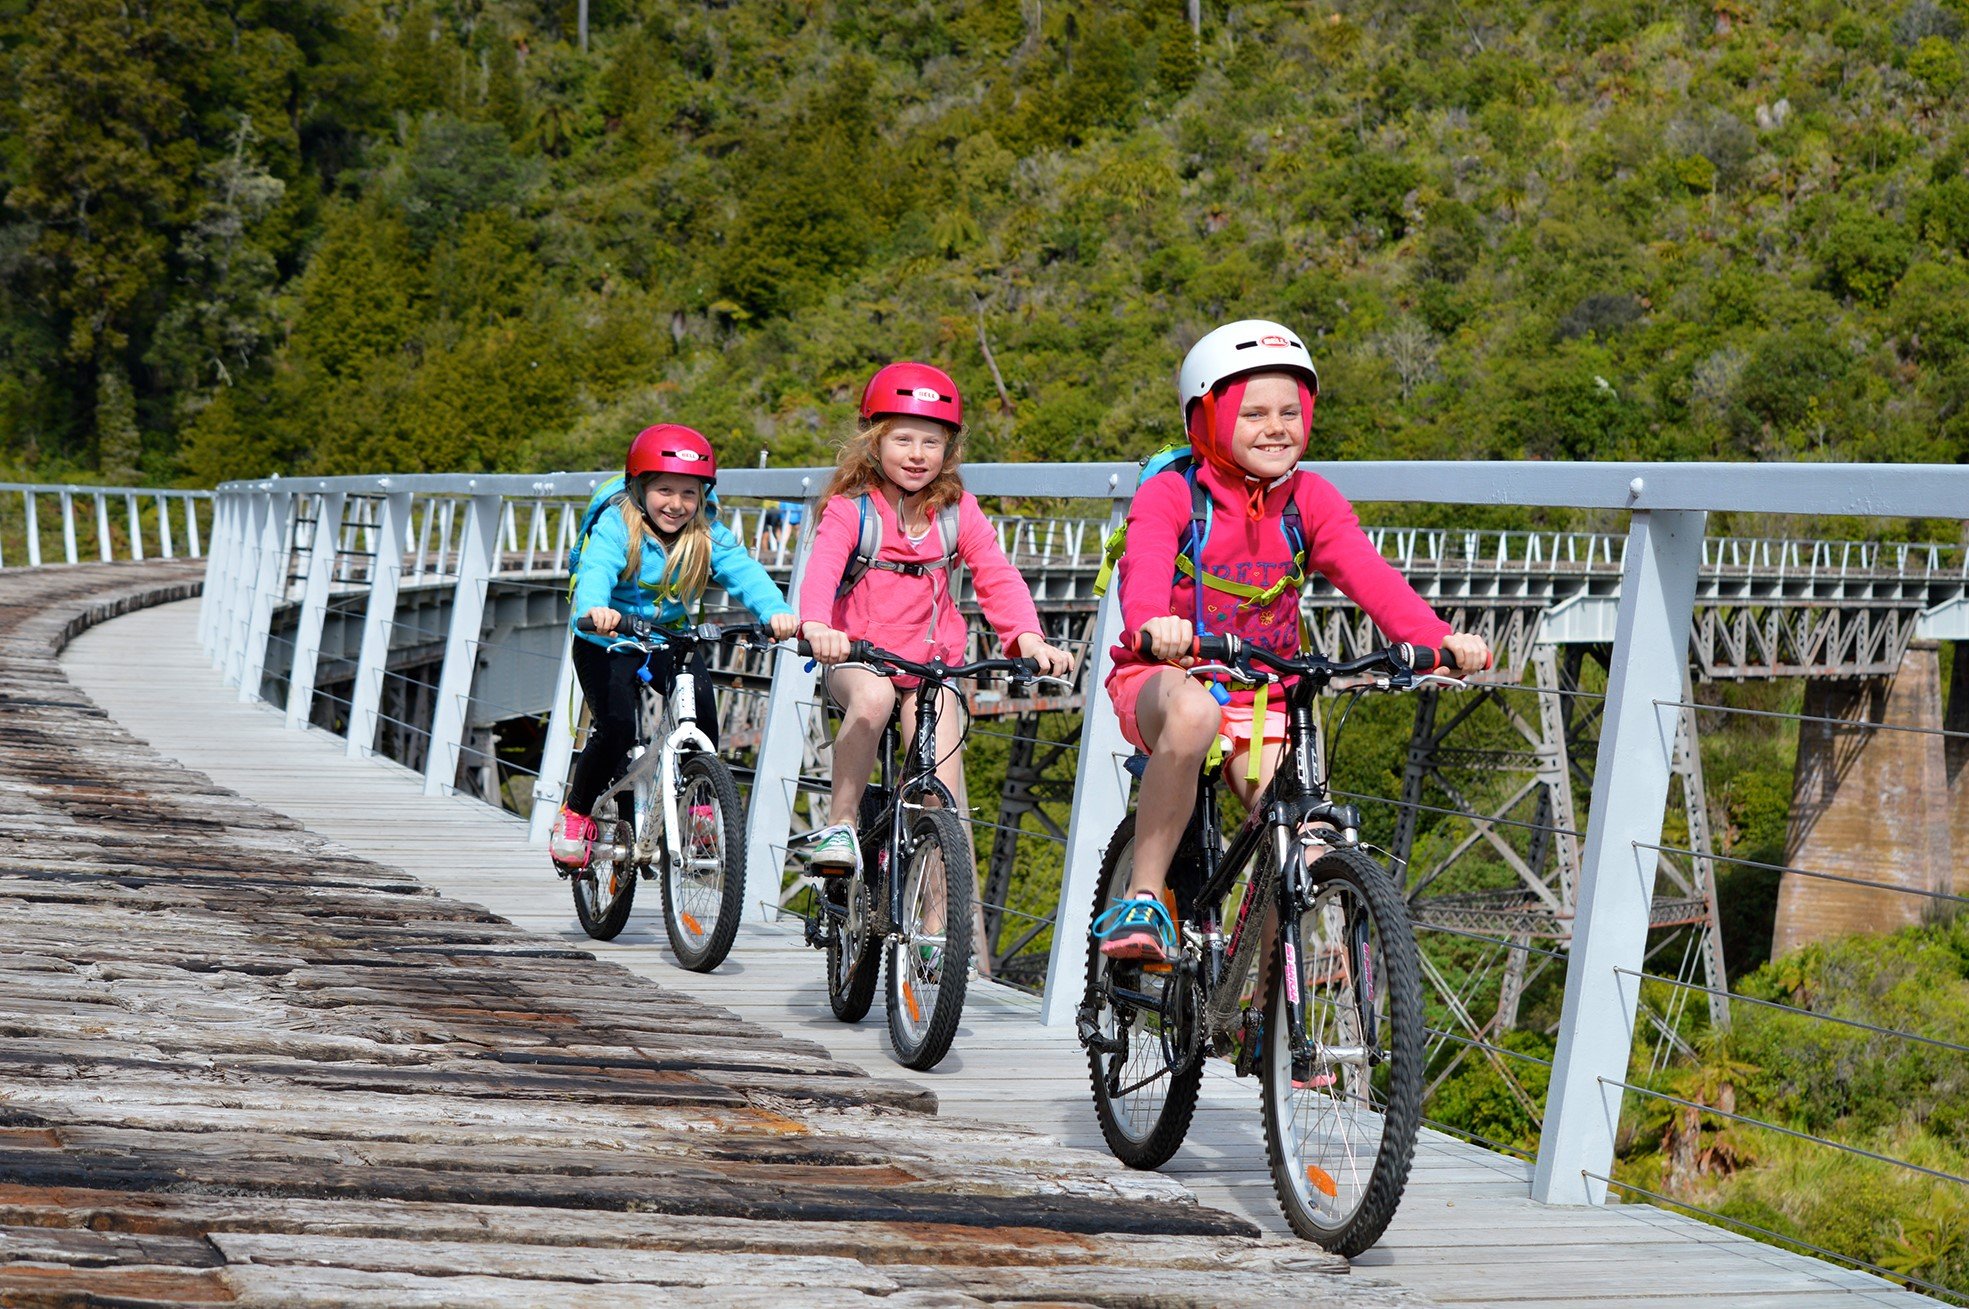 Youth_cycling_Hapuwhenua_Viaduct- Visit Ruapehu .jpg